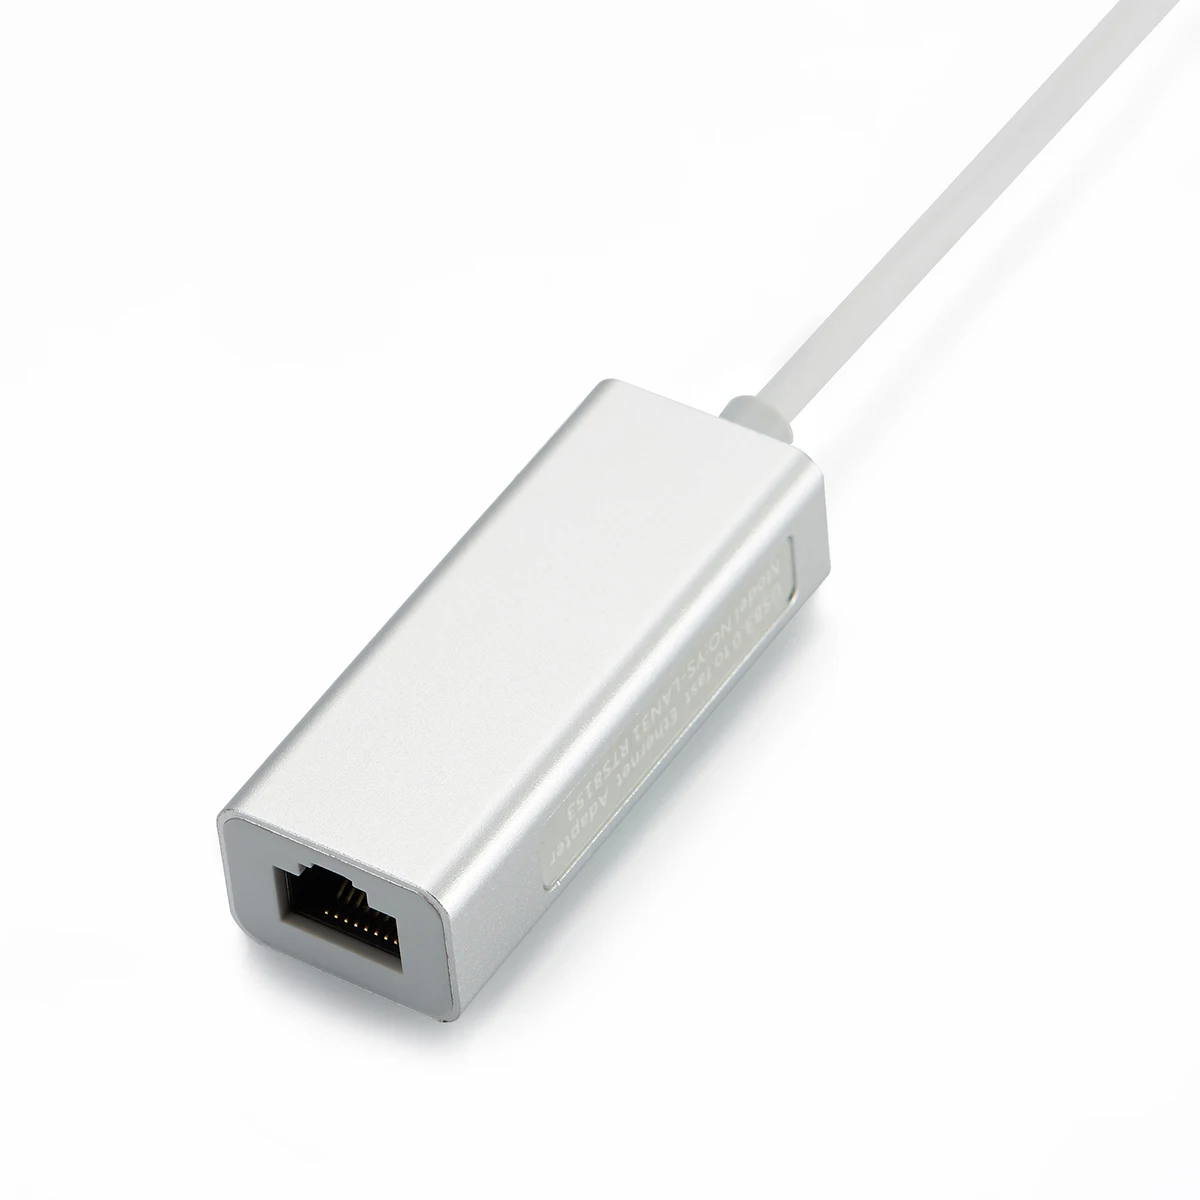 USB2.0 to RJ45 cable adapter/ USB Ethernet Network Lan co<i></i>nverter for laptop computer tablet